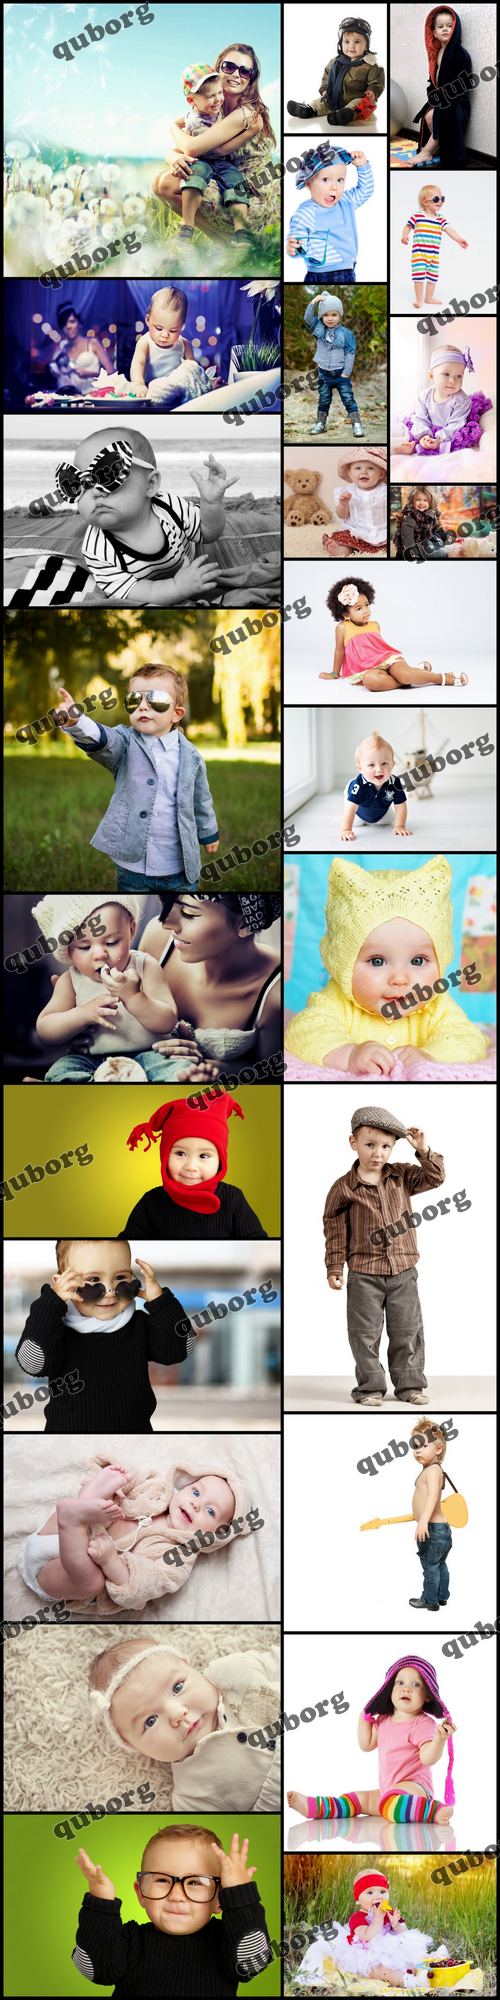 Stock Photos - Baby Fashion